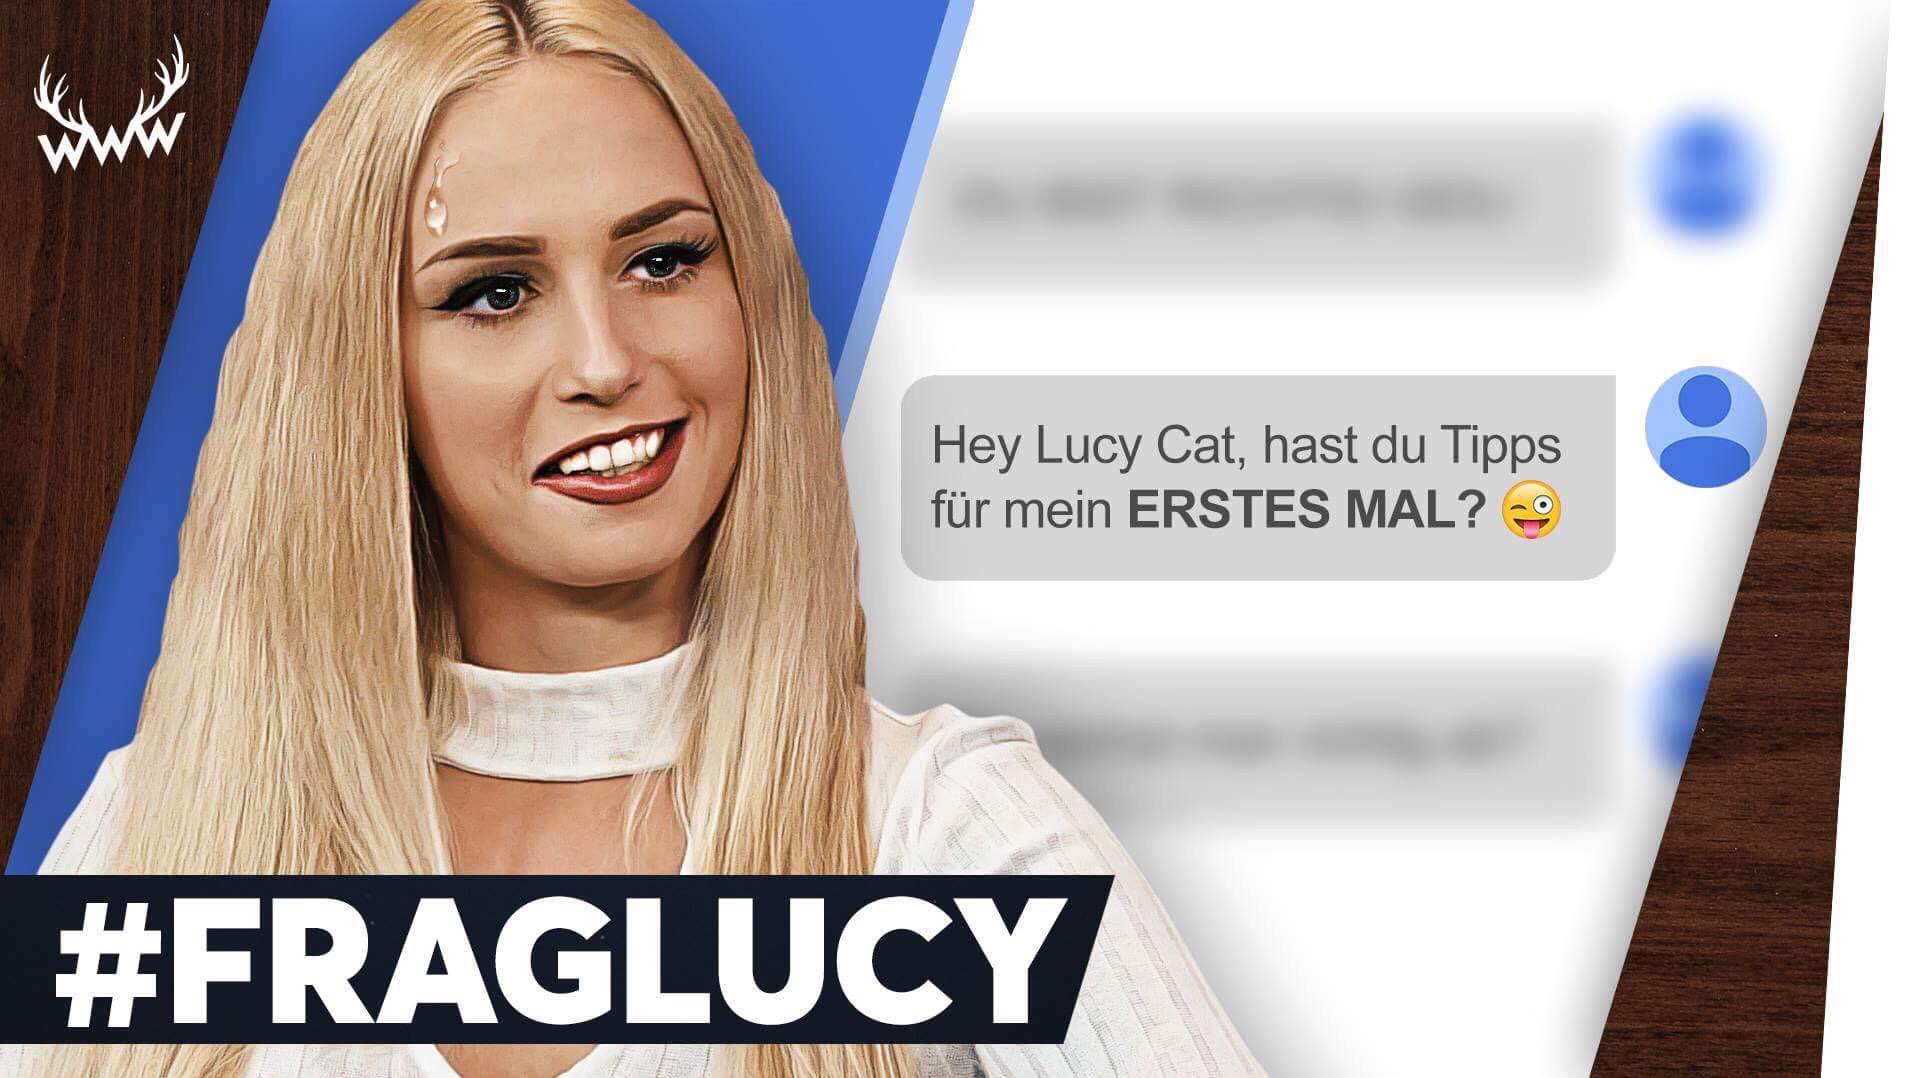 Cat de lucy Lucy the